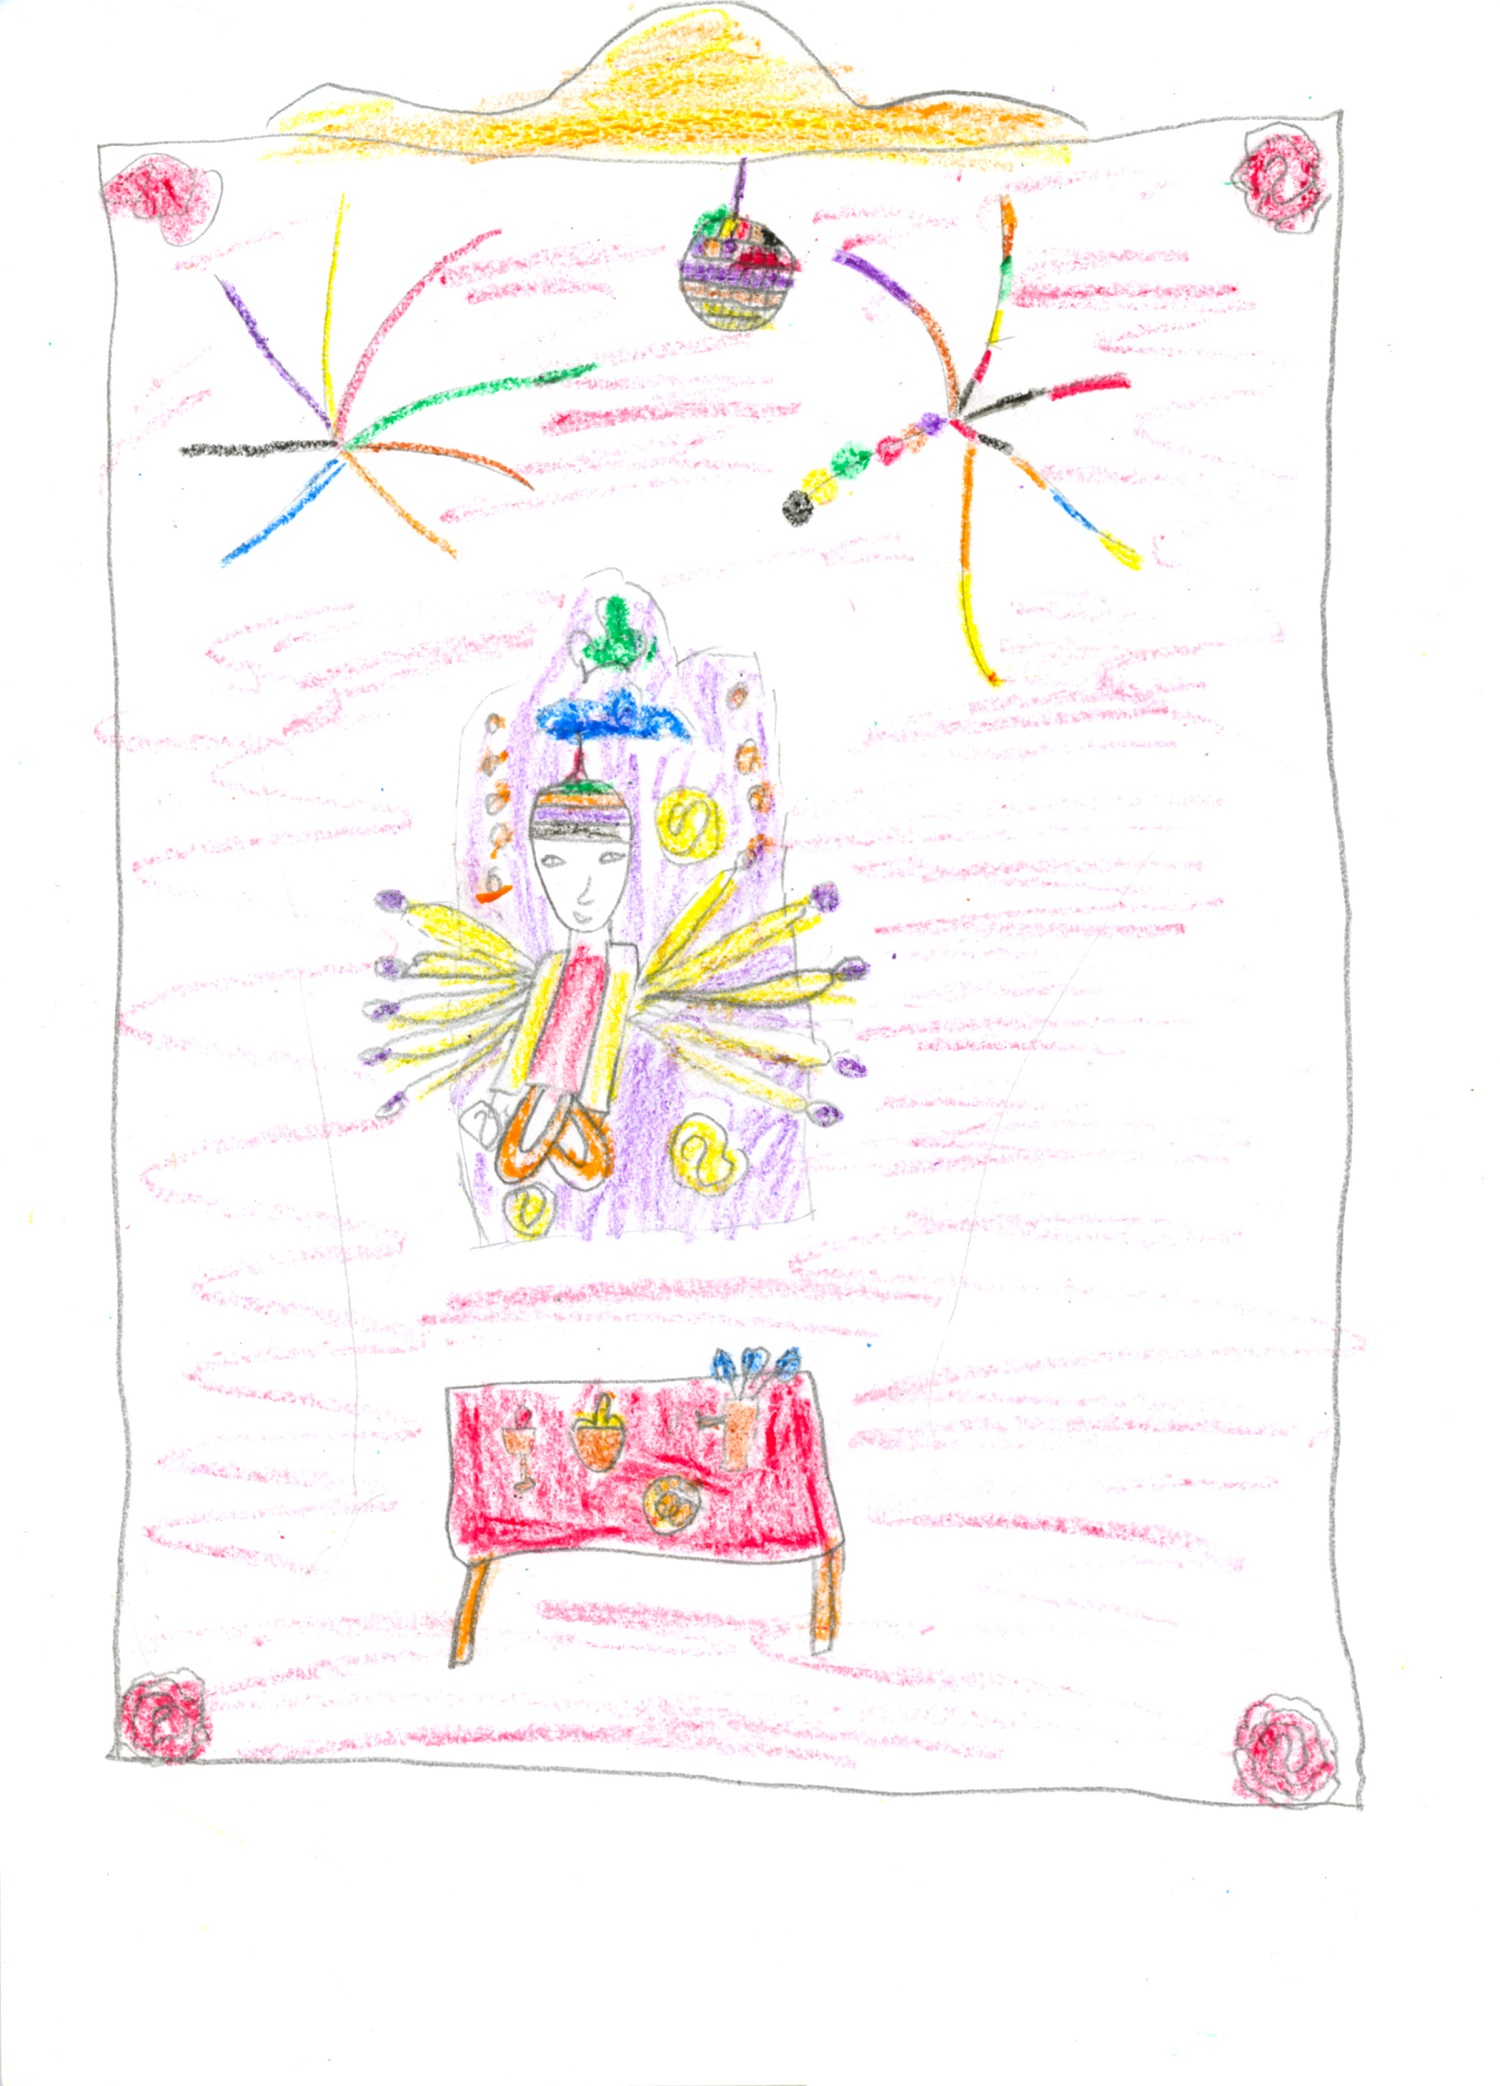 El panteón budista. Leyenda del niño: “Dibujé bourkhan”